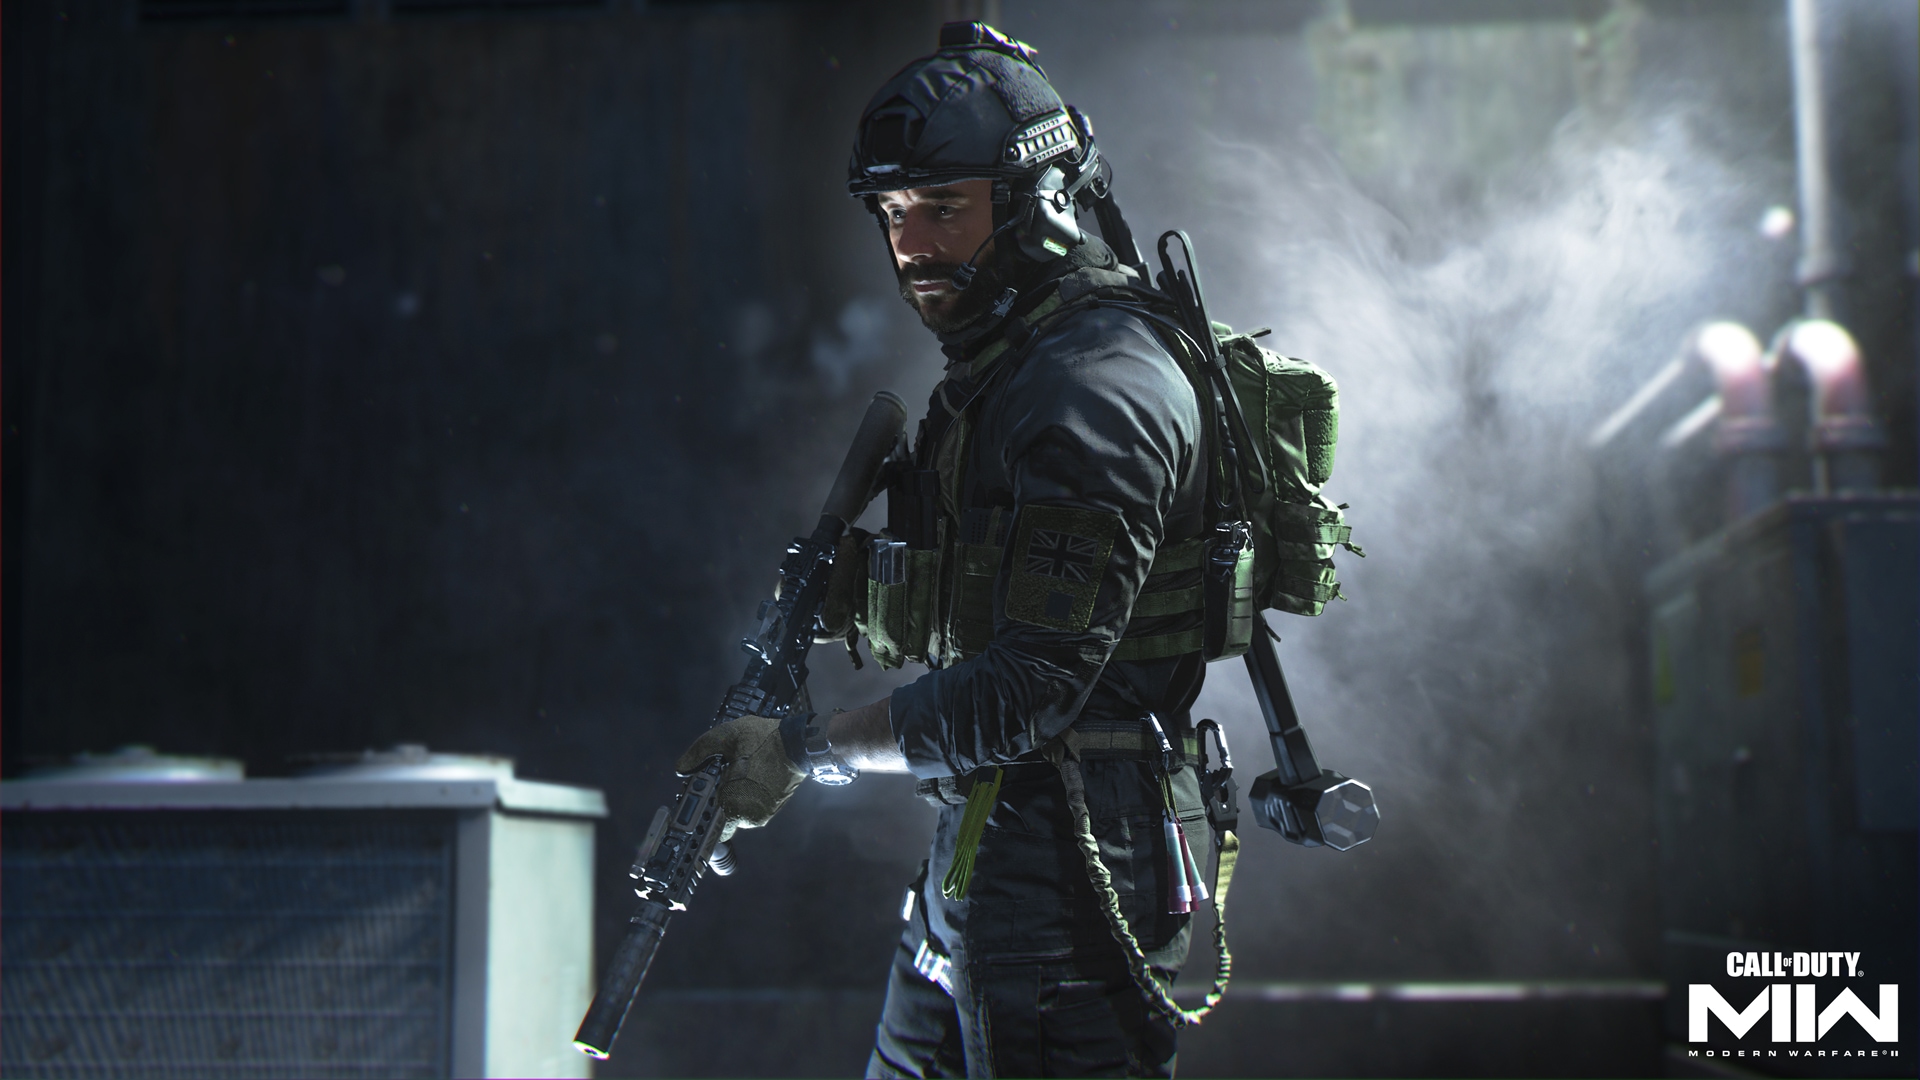 Call of Duty: Modern Warfare III: preço, lançamento e onde jogar